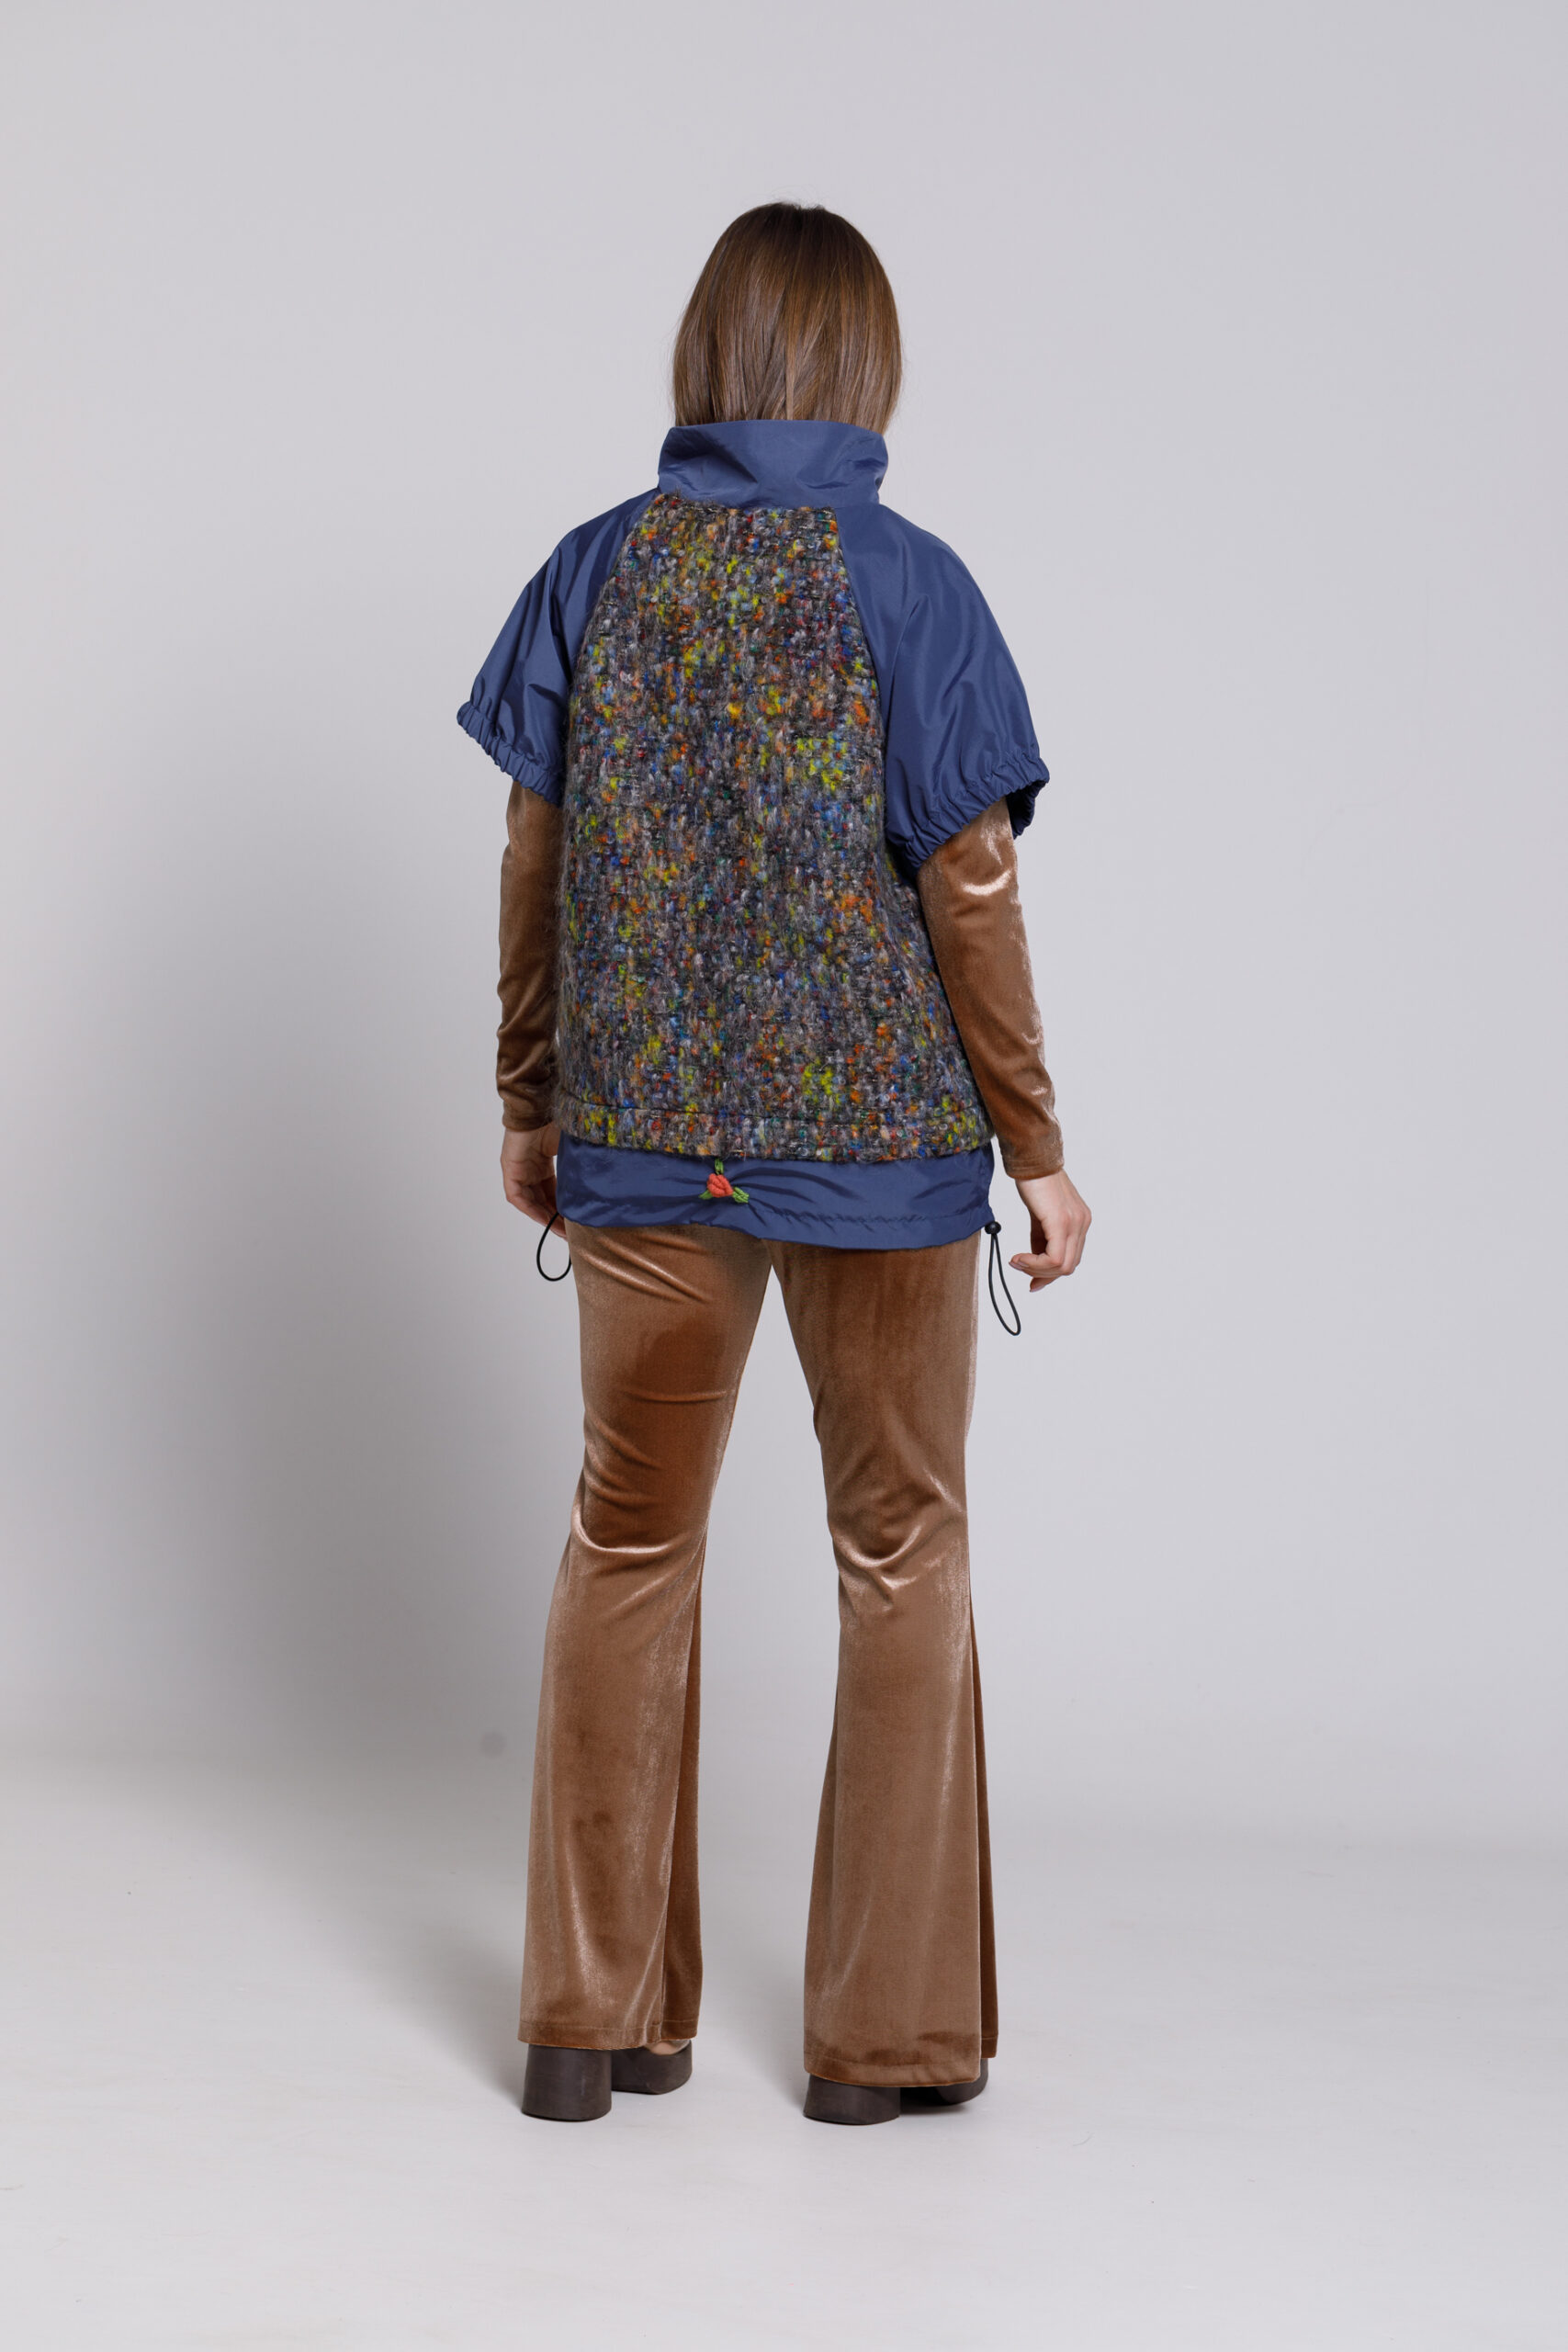 Vesta XELA albastra cu tricot multicolor. Materiale naturale, design unicat, cu broderie si aplicatii handmade